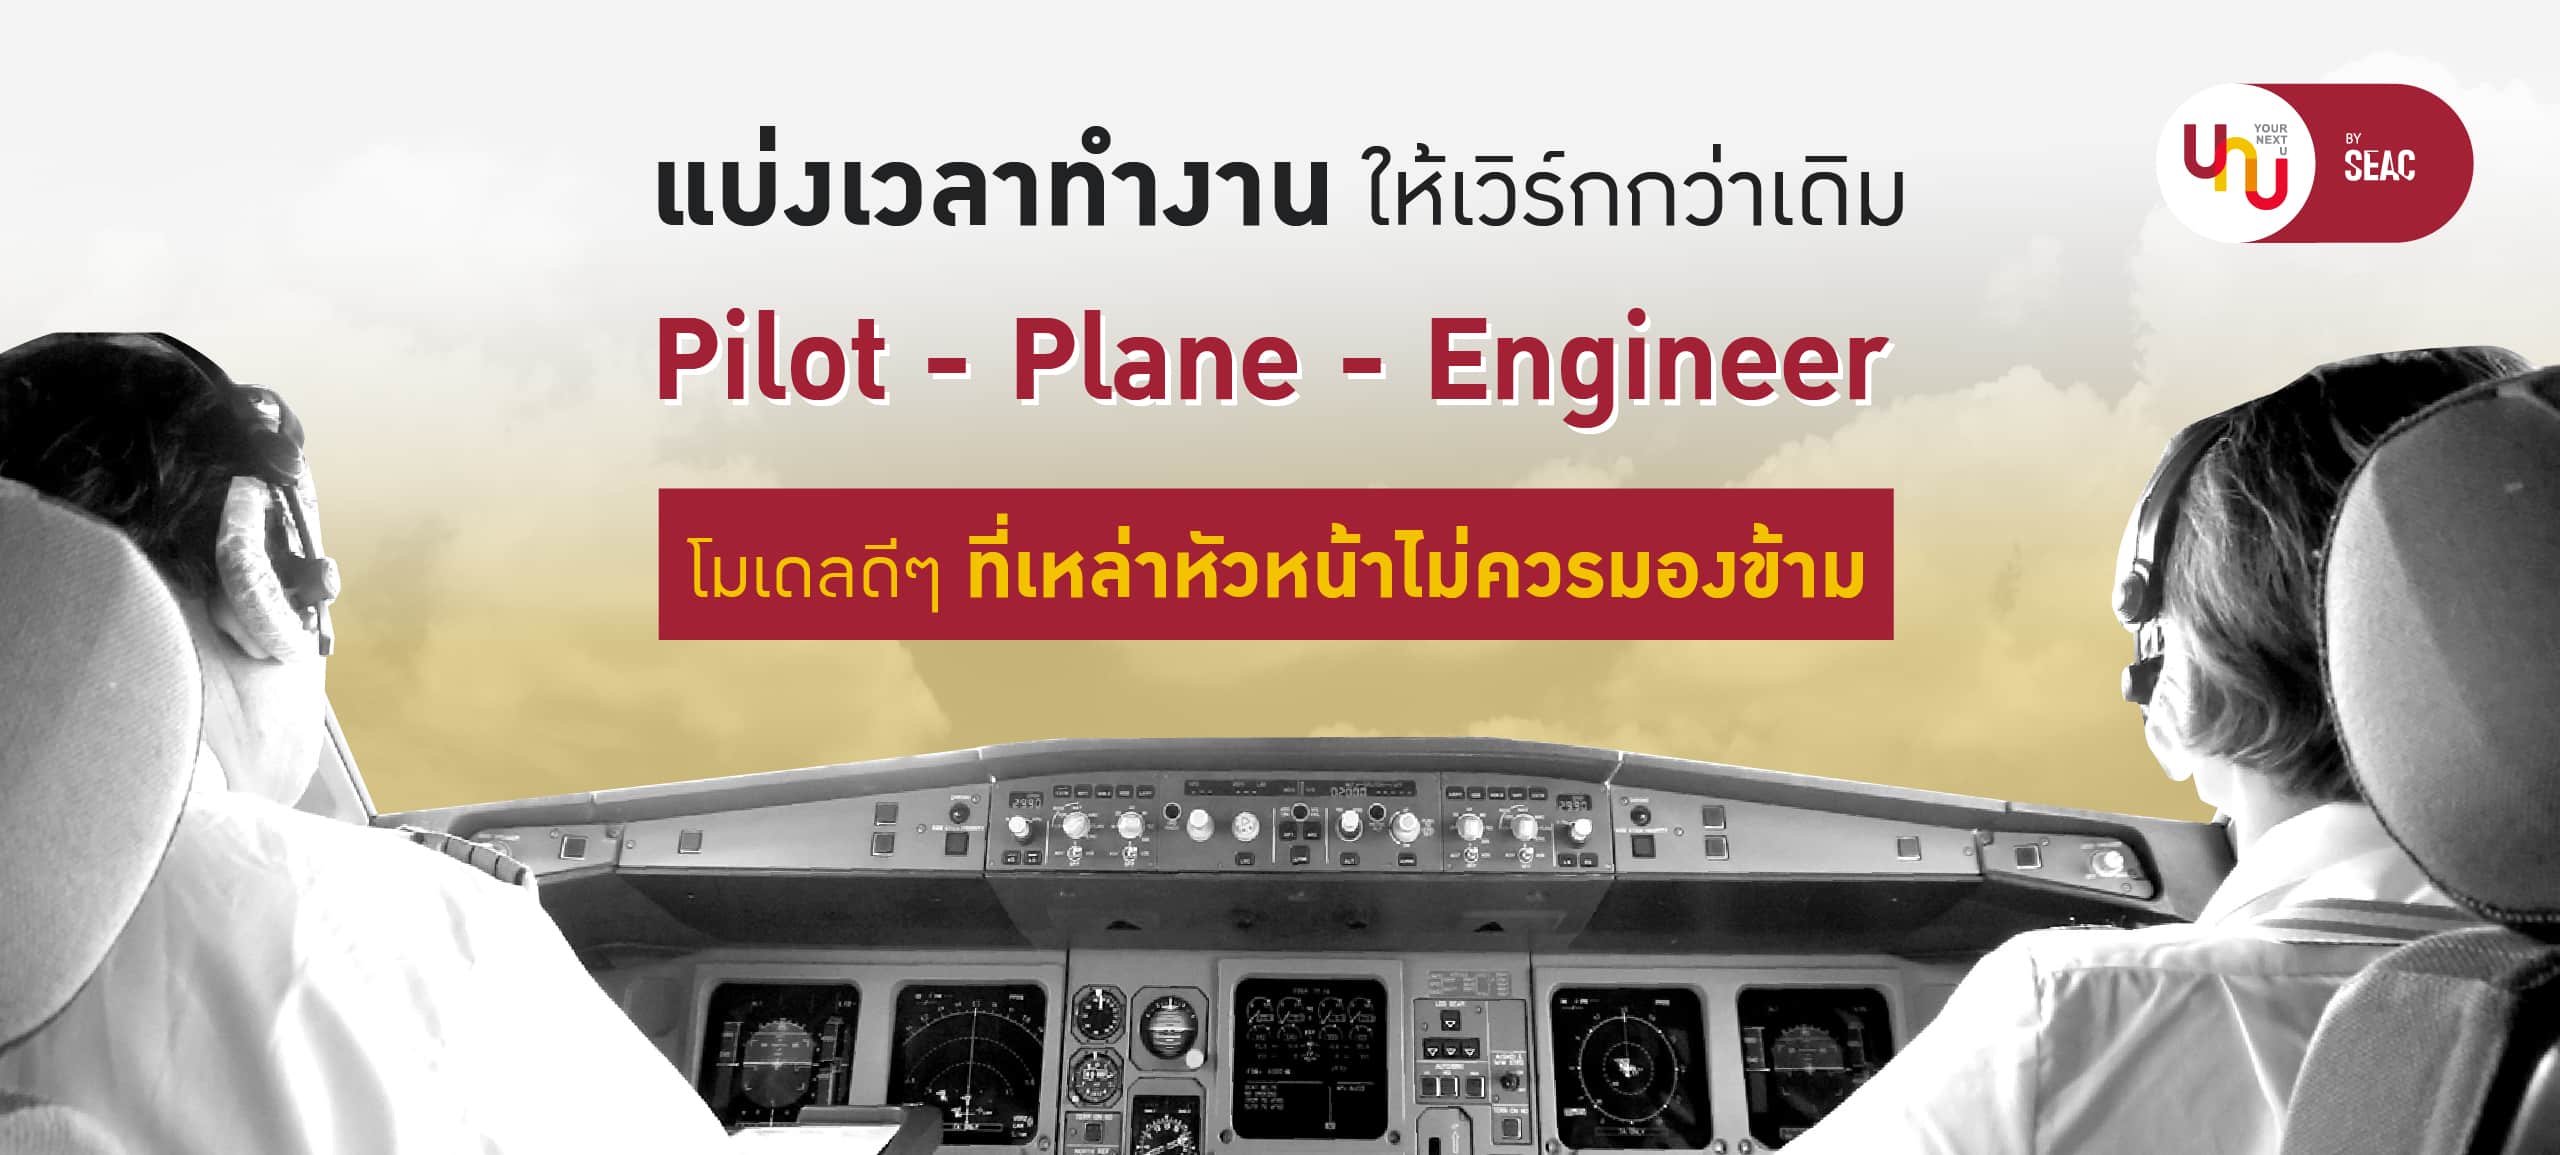 04_Pilot - Plane - Engineer1-100